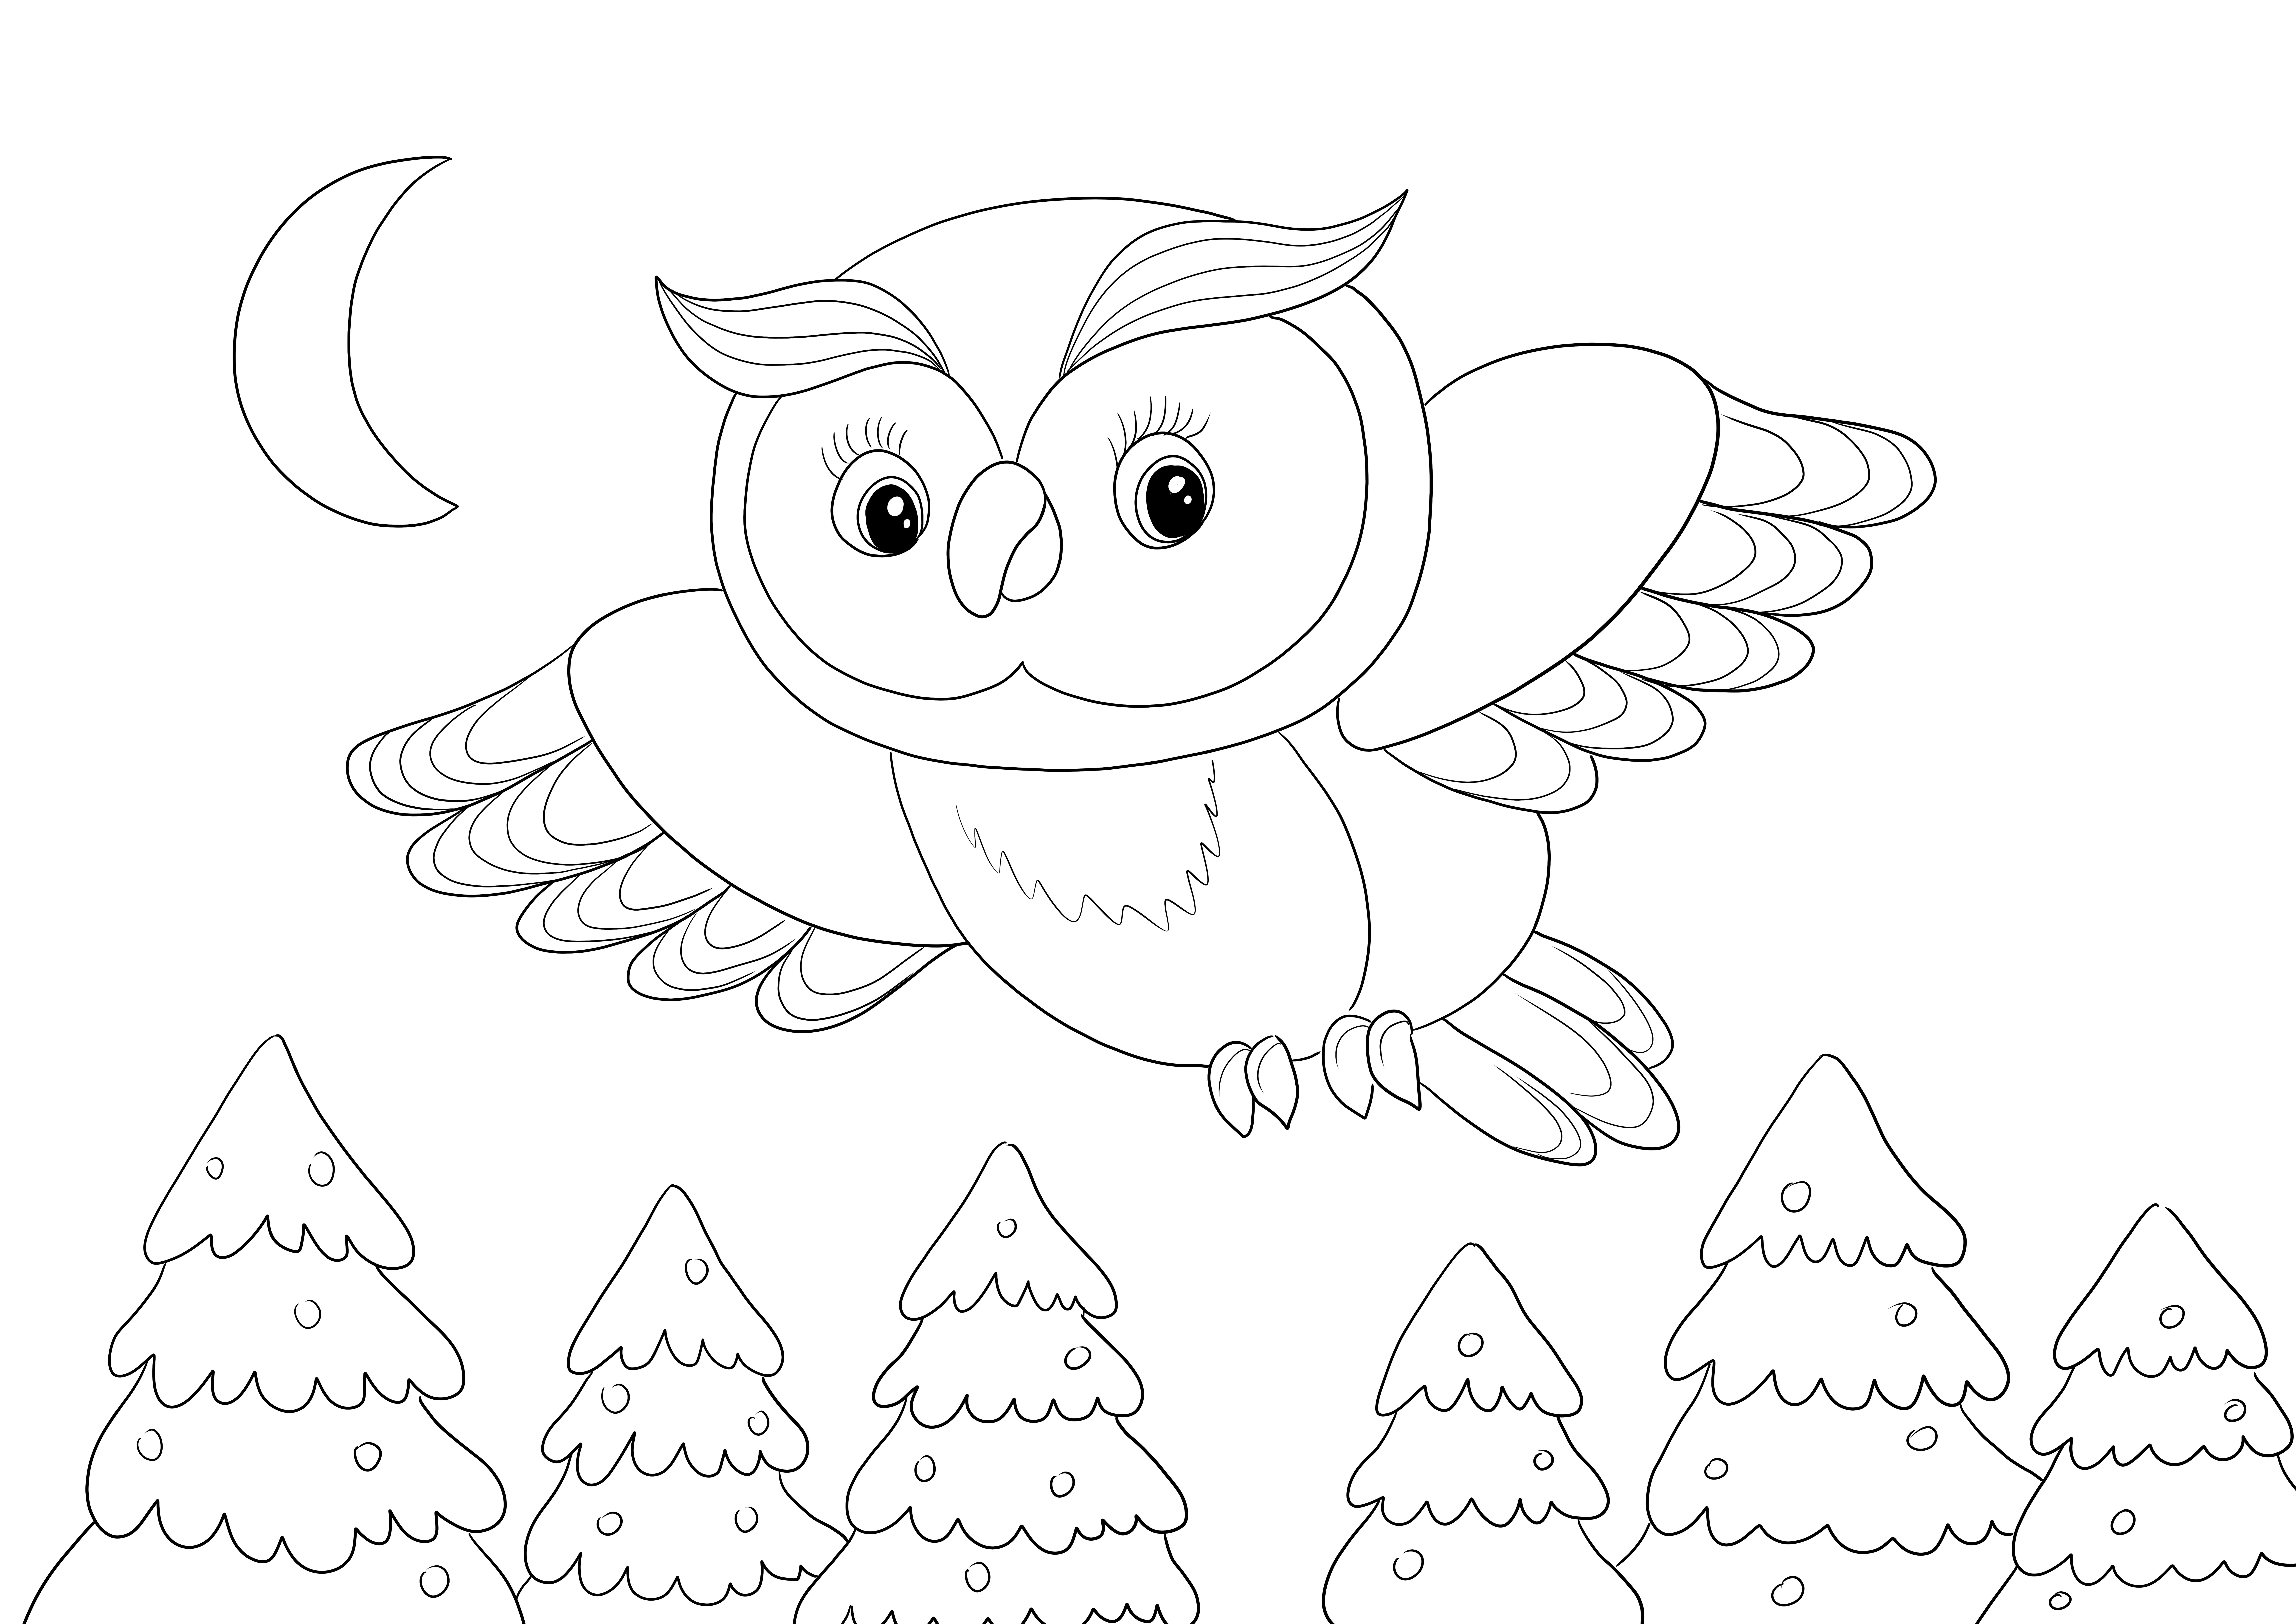 Coruja voando sobre pinheiros grátis para imprimir para colorir ou baixar